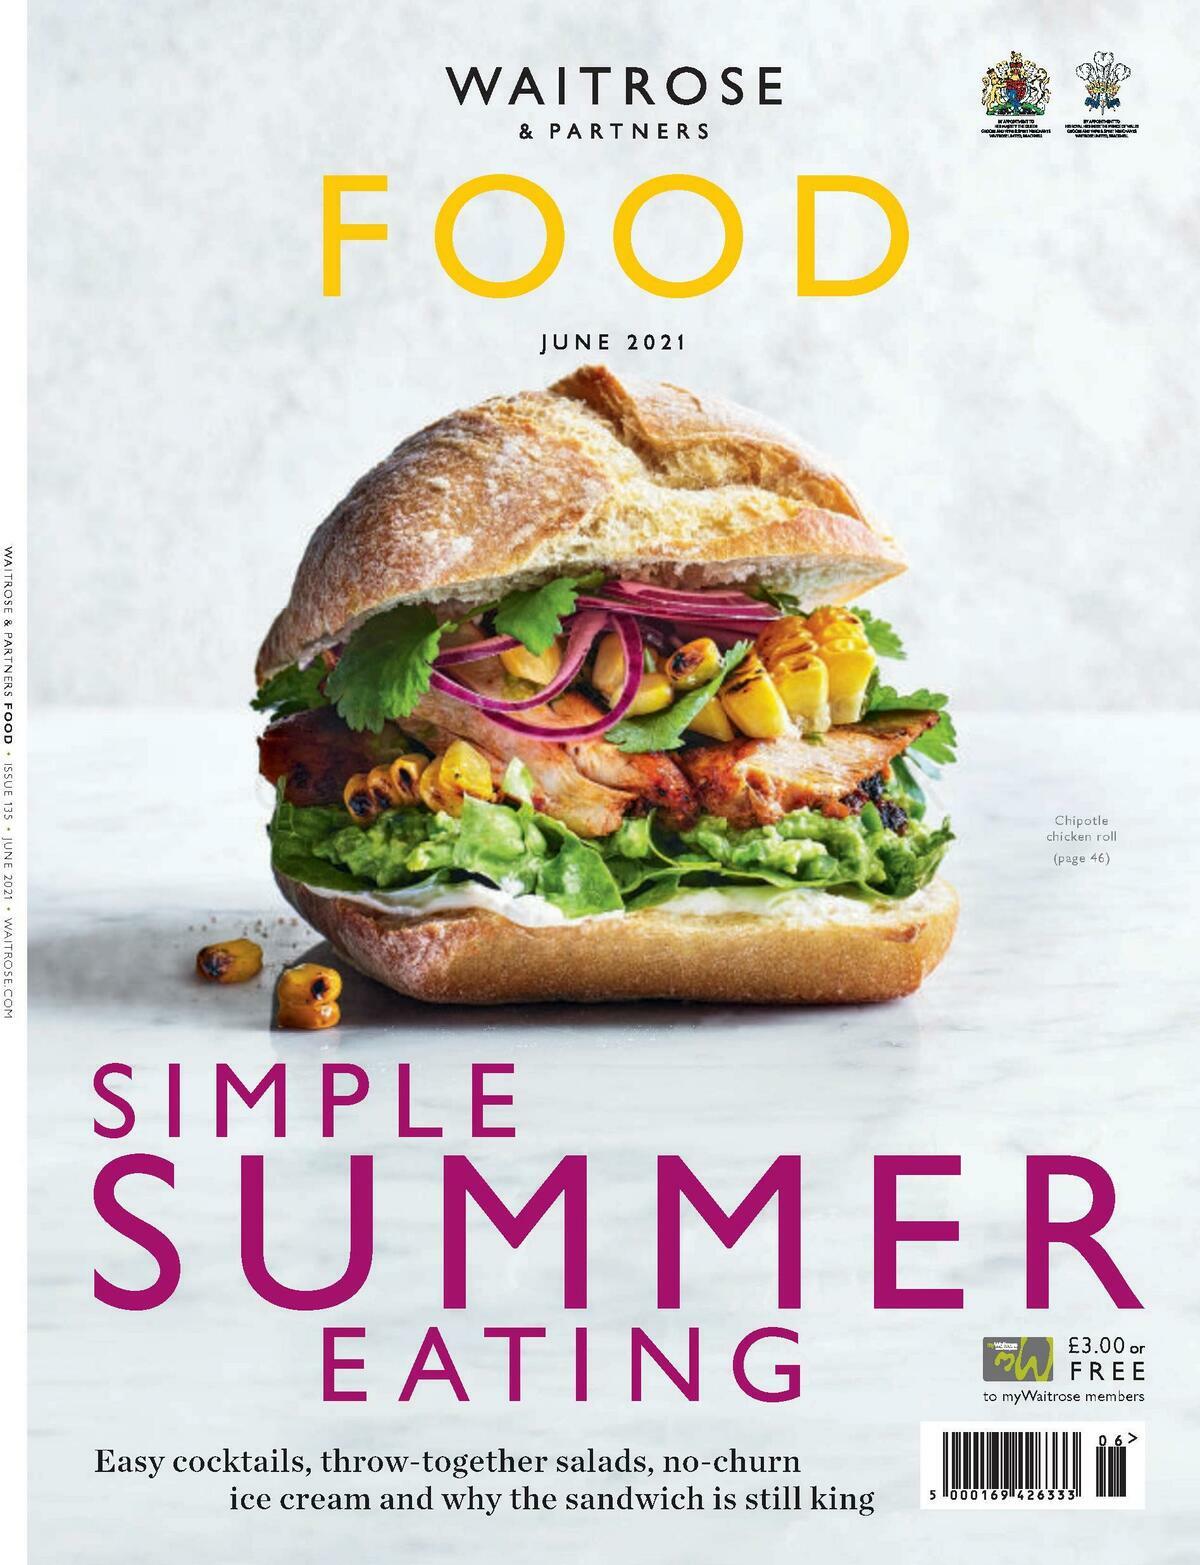 Waitrose Food Magazine June Offers from 1 June